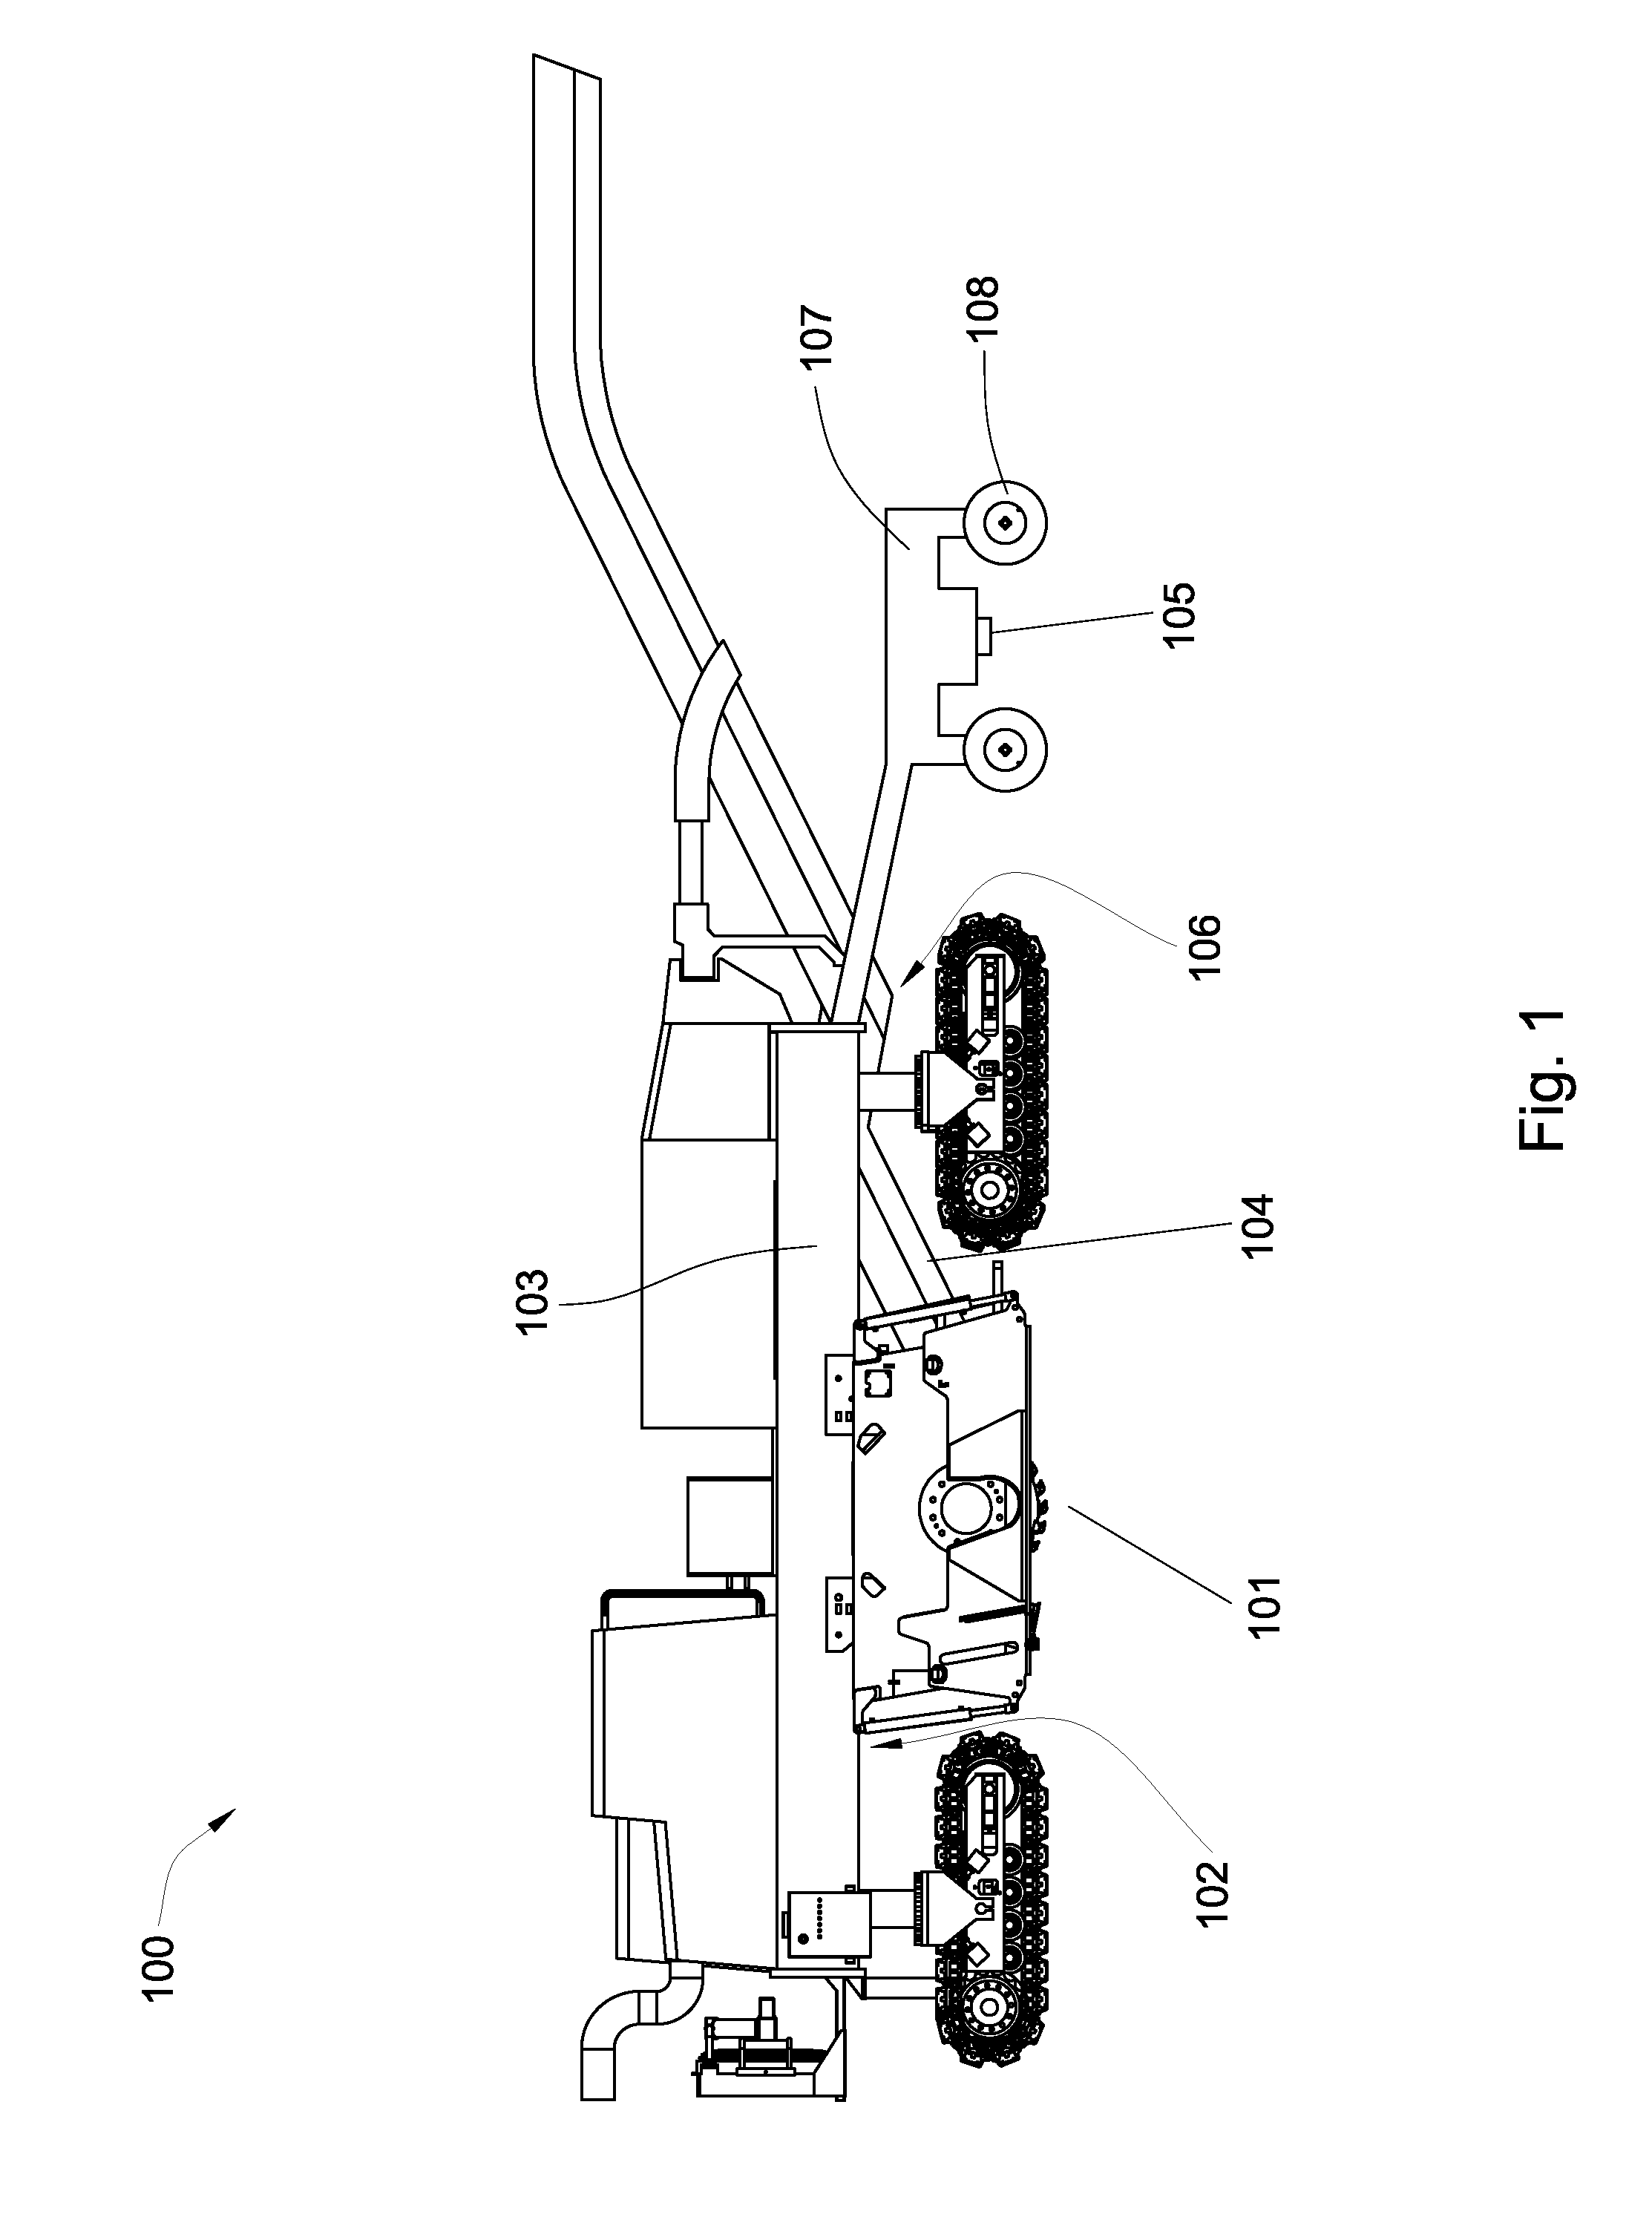 Metal Detector for an Asphalt Milling Machine